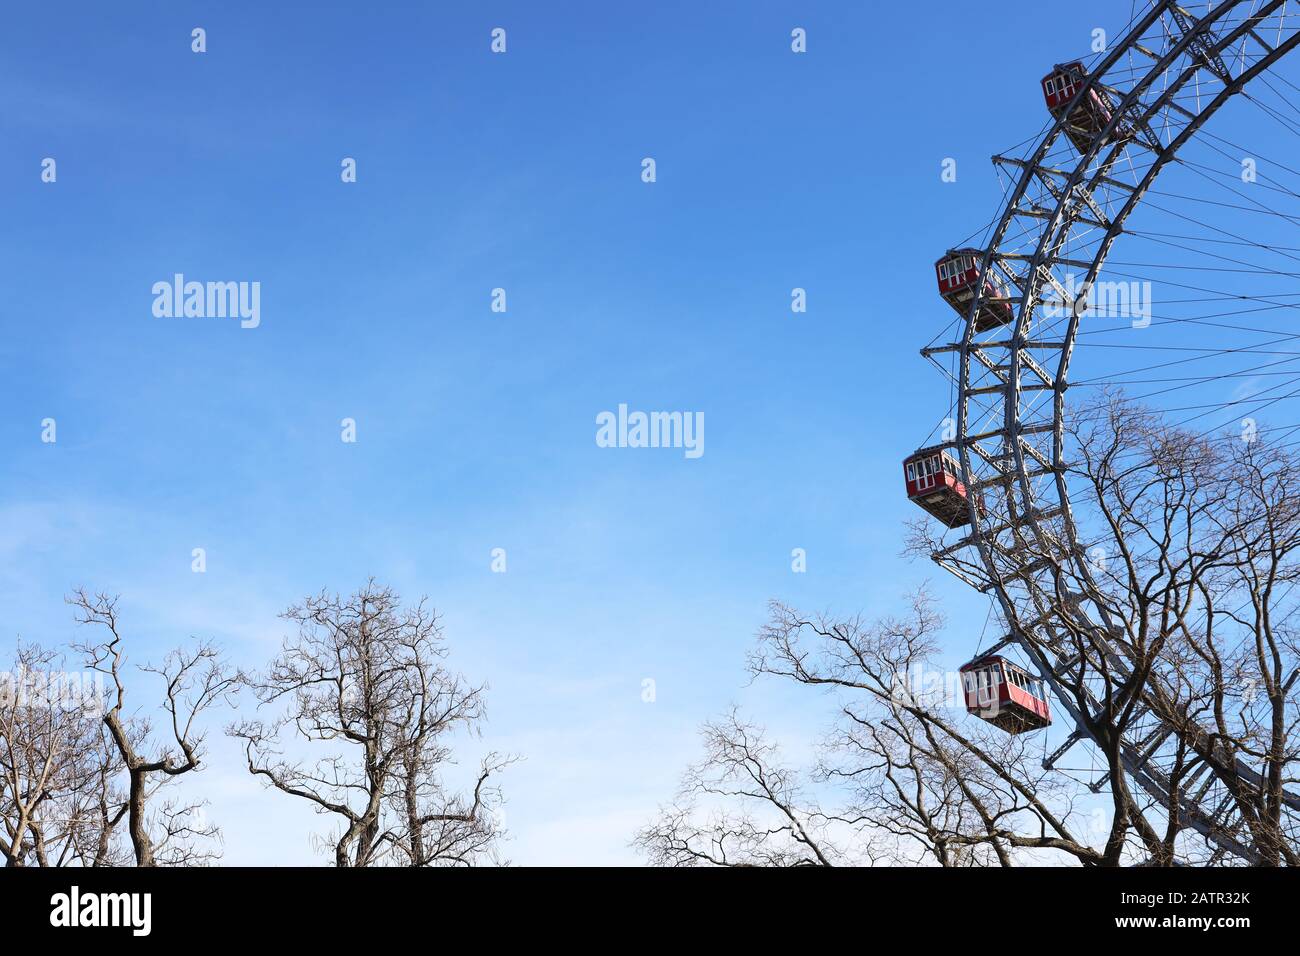 The big ferris wheel 'Wiener Riesenrad'  is the main landmark of Vienna, Austria | Photo taken in January 2020 Stock Photo